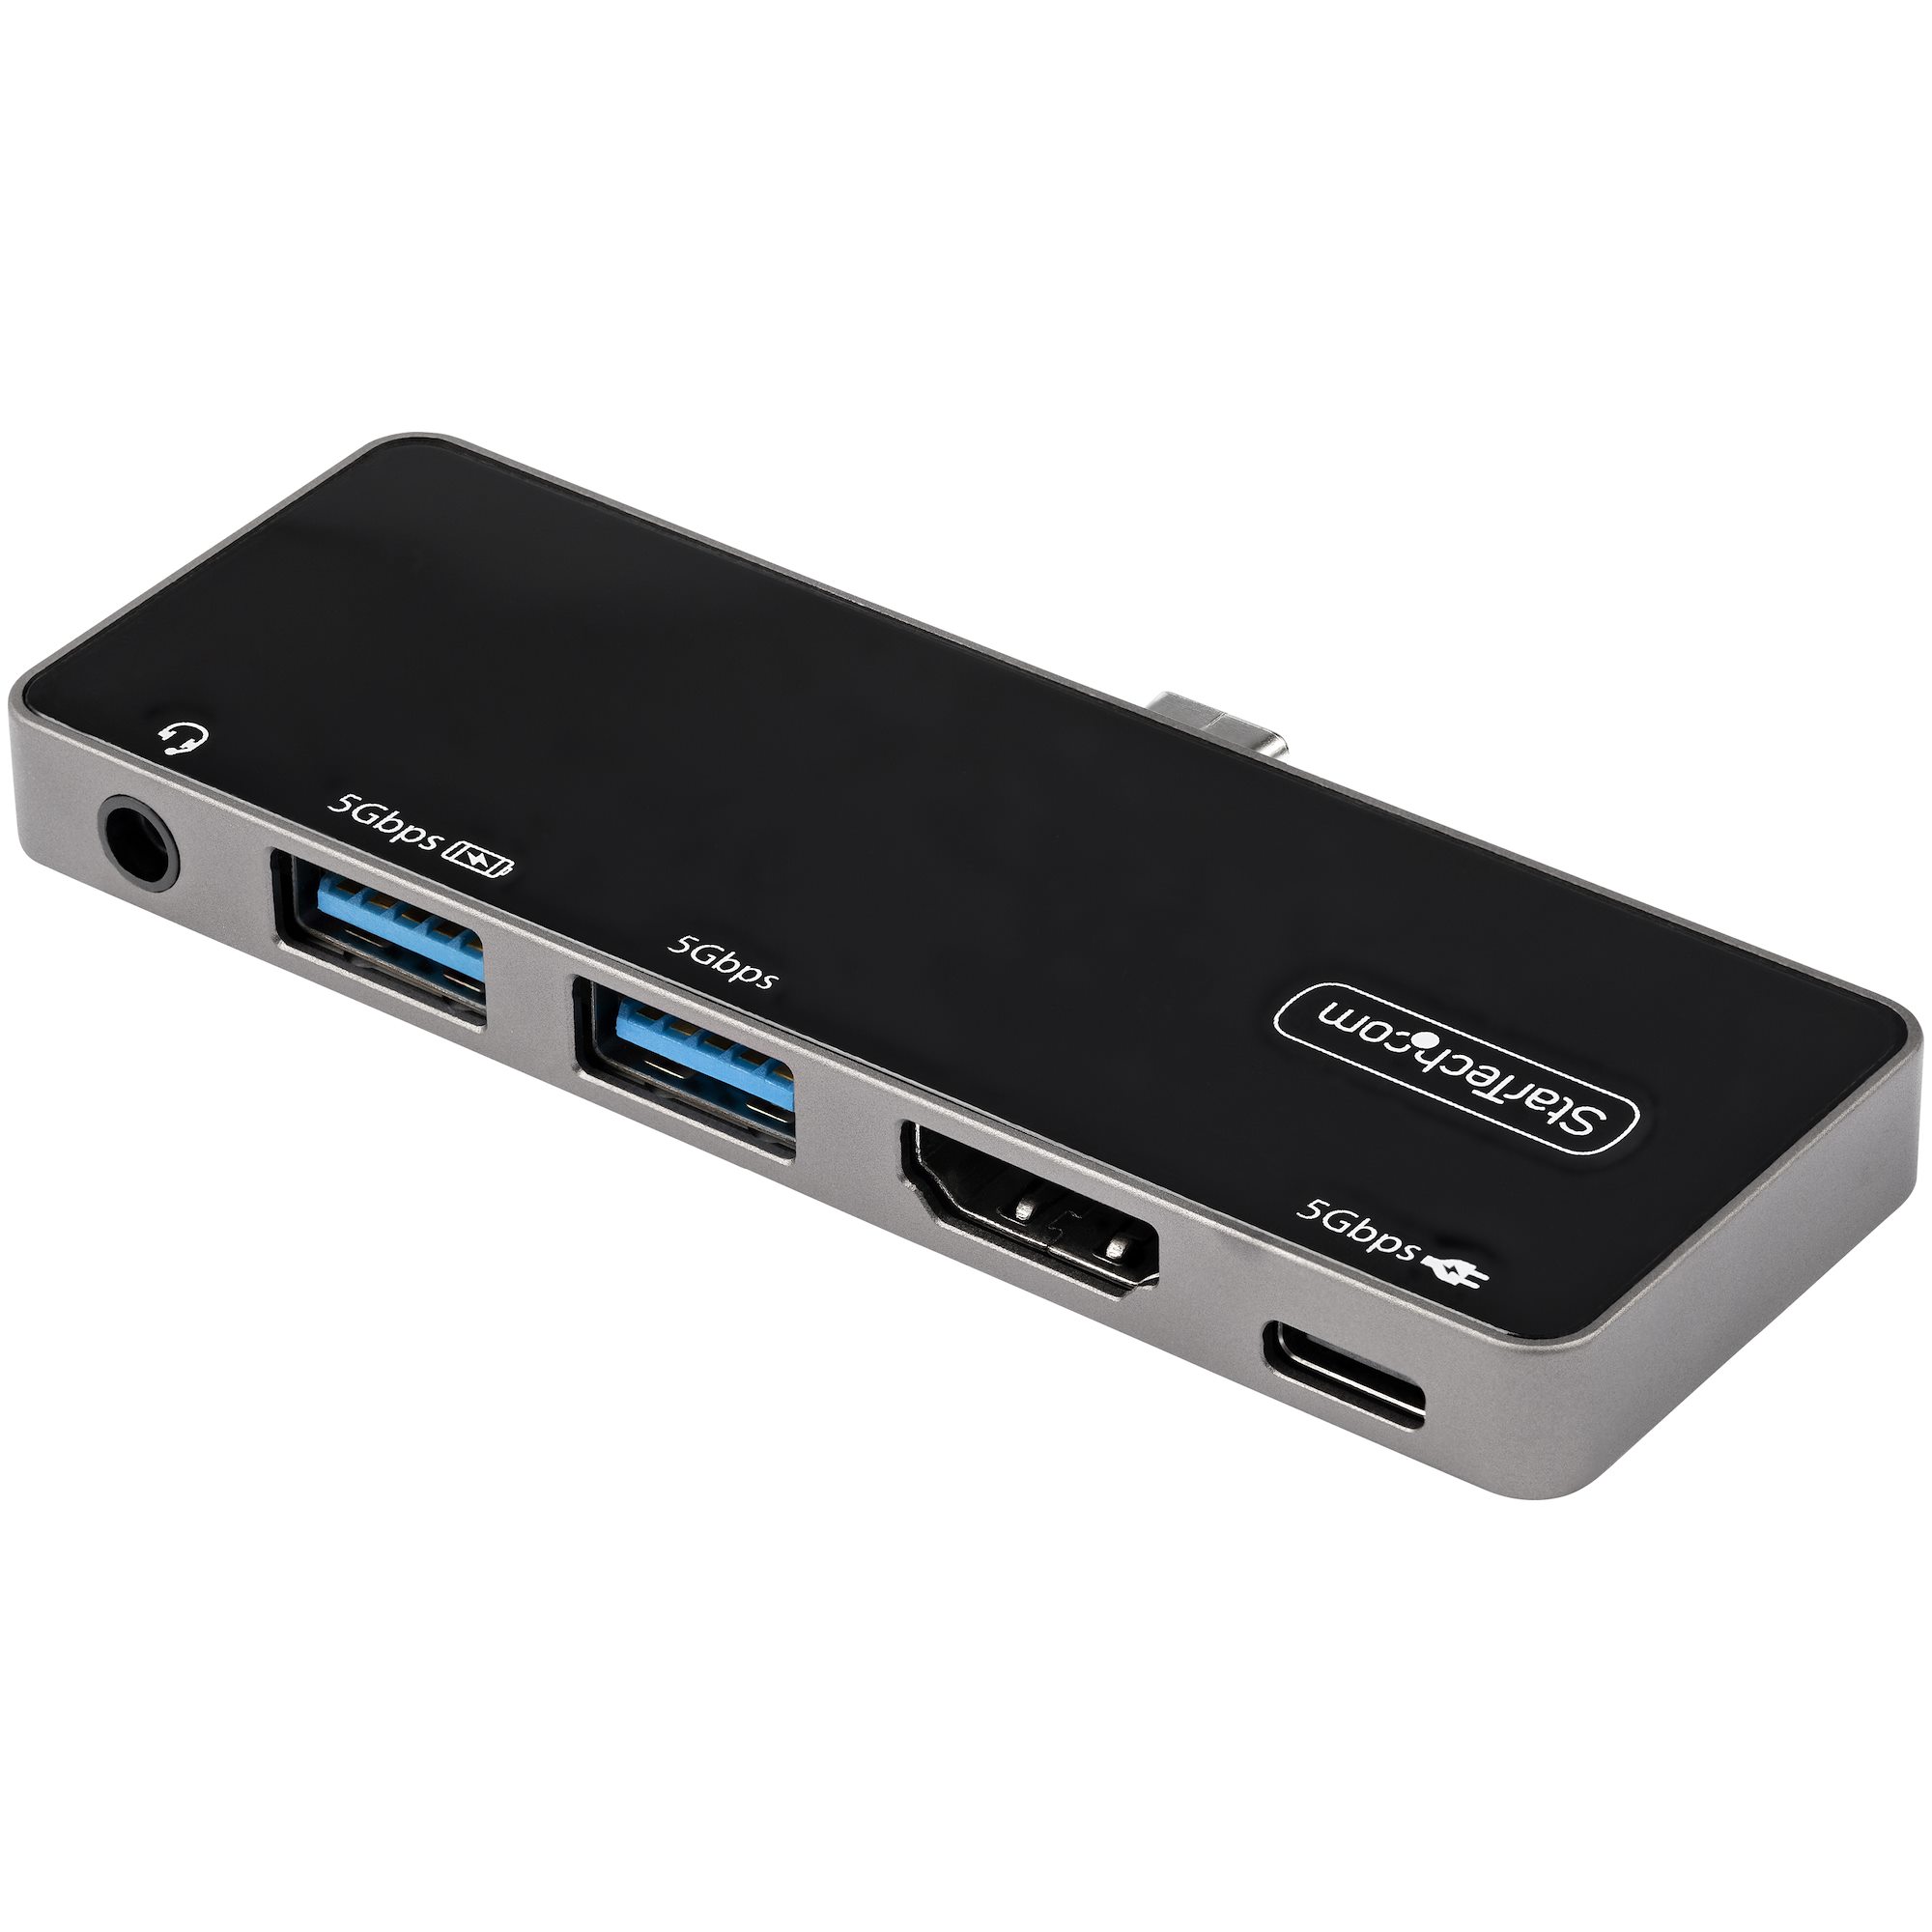 USB C Hub Multiport Adapter for iPad Pro MacBook Pro Air M1 2021-2018 9-in-1 USB C 4K HDMI Adapter with 3.5mm Audio Jack,3xUSB3.0,SD/Micro SD Card Reader,60W USB C Charging,USB-C 3.0 Data 